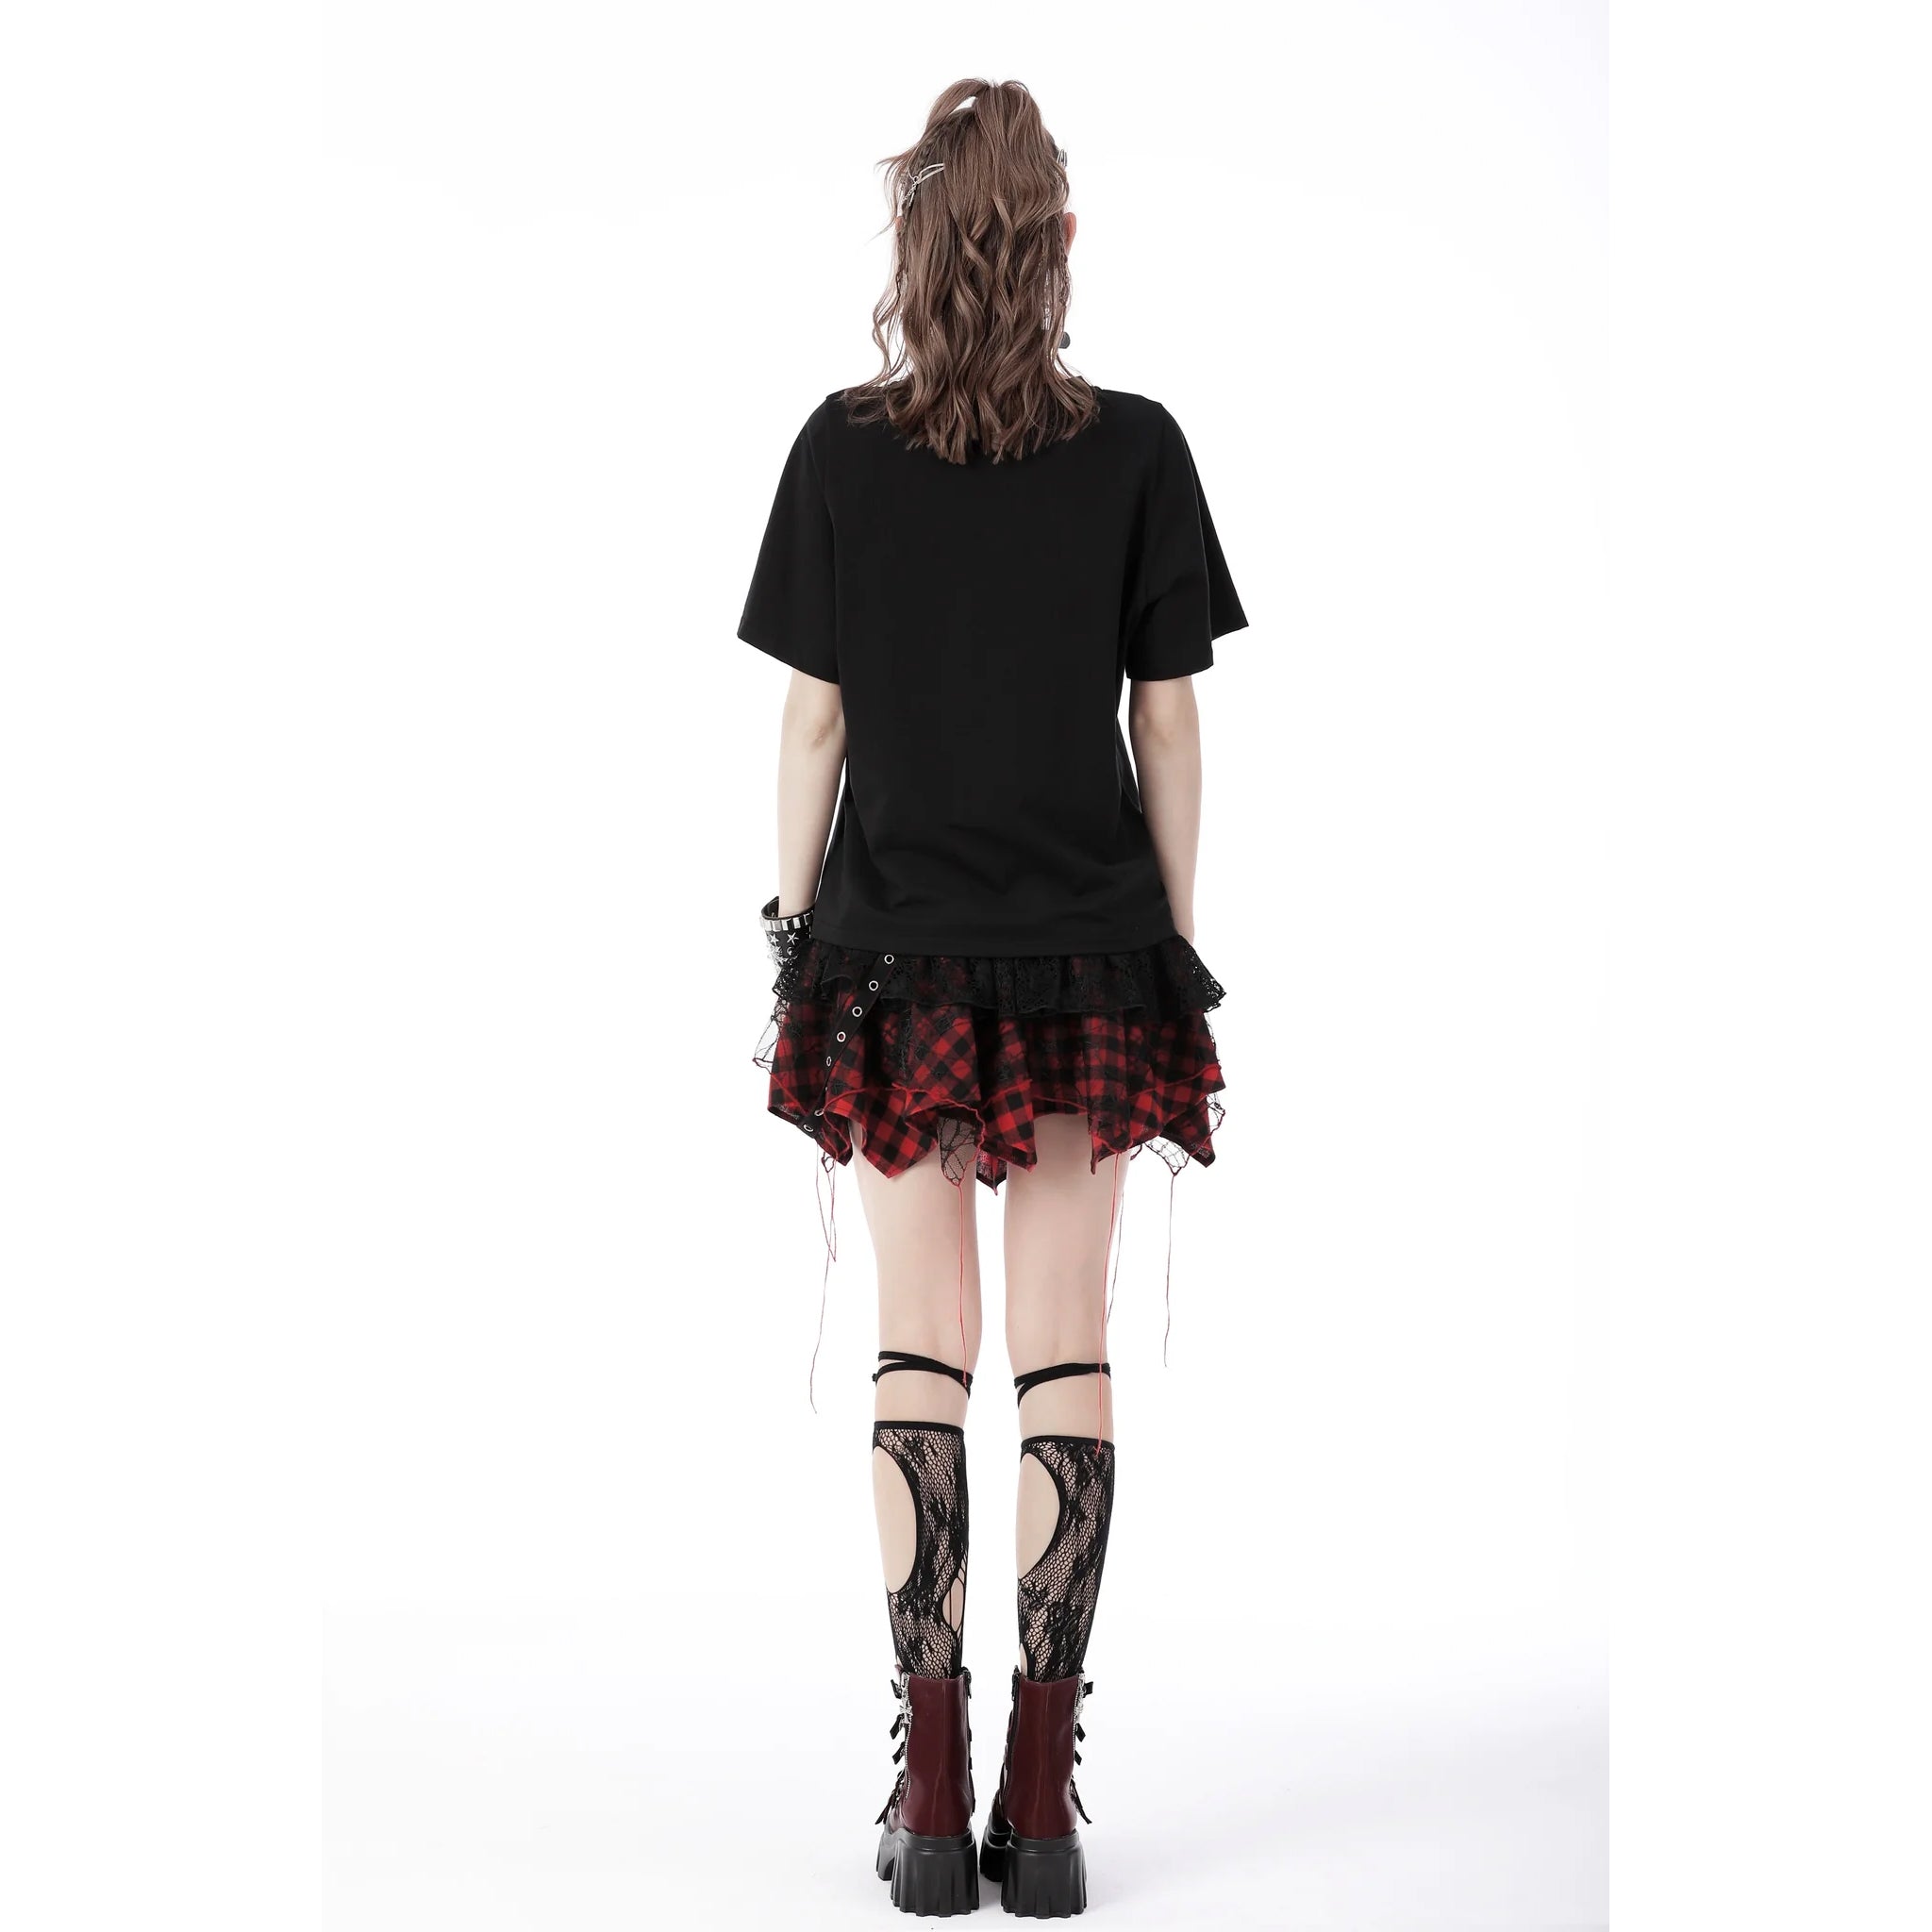 Lace Overlay Plaid Skirt